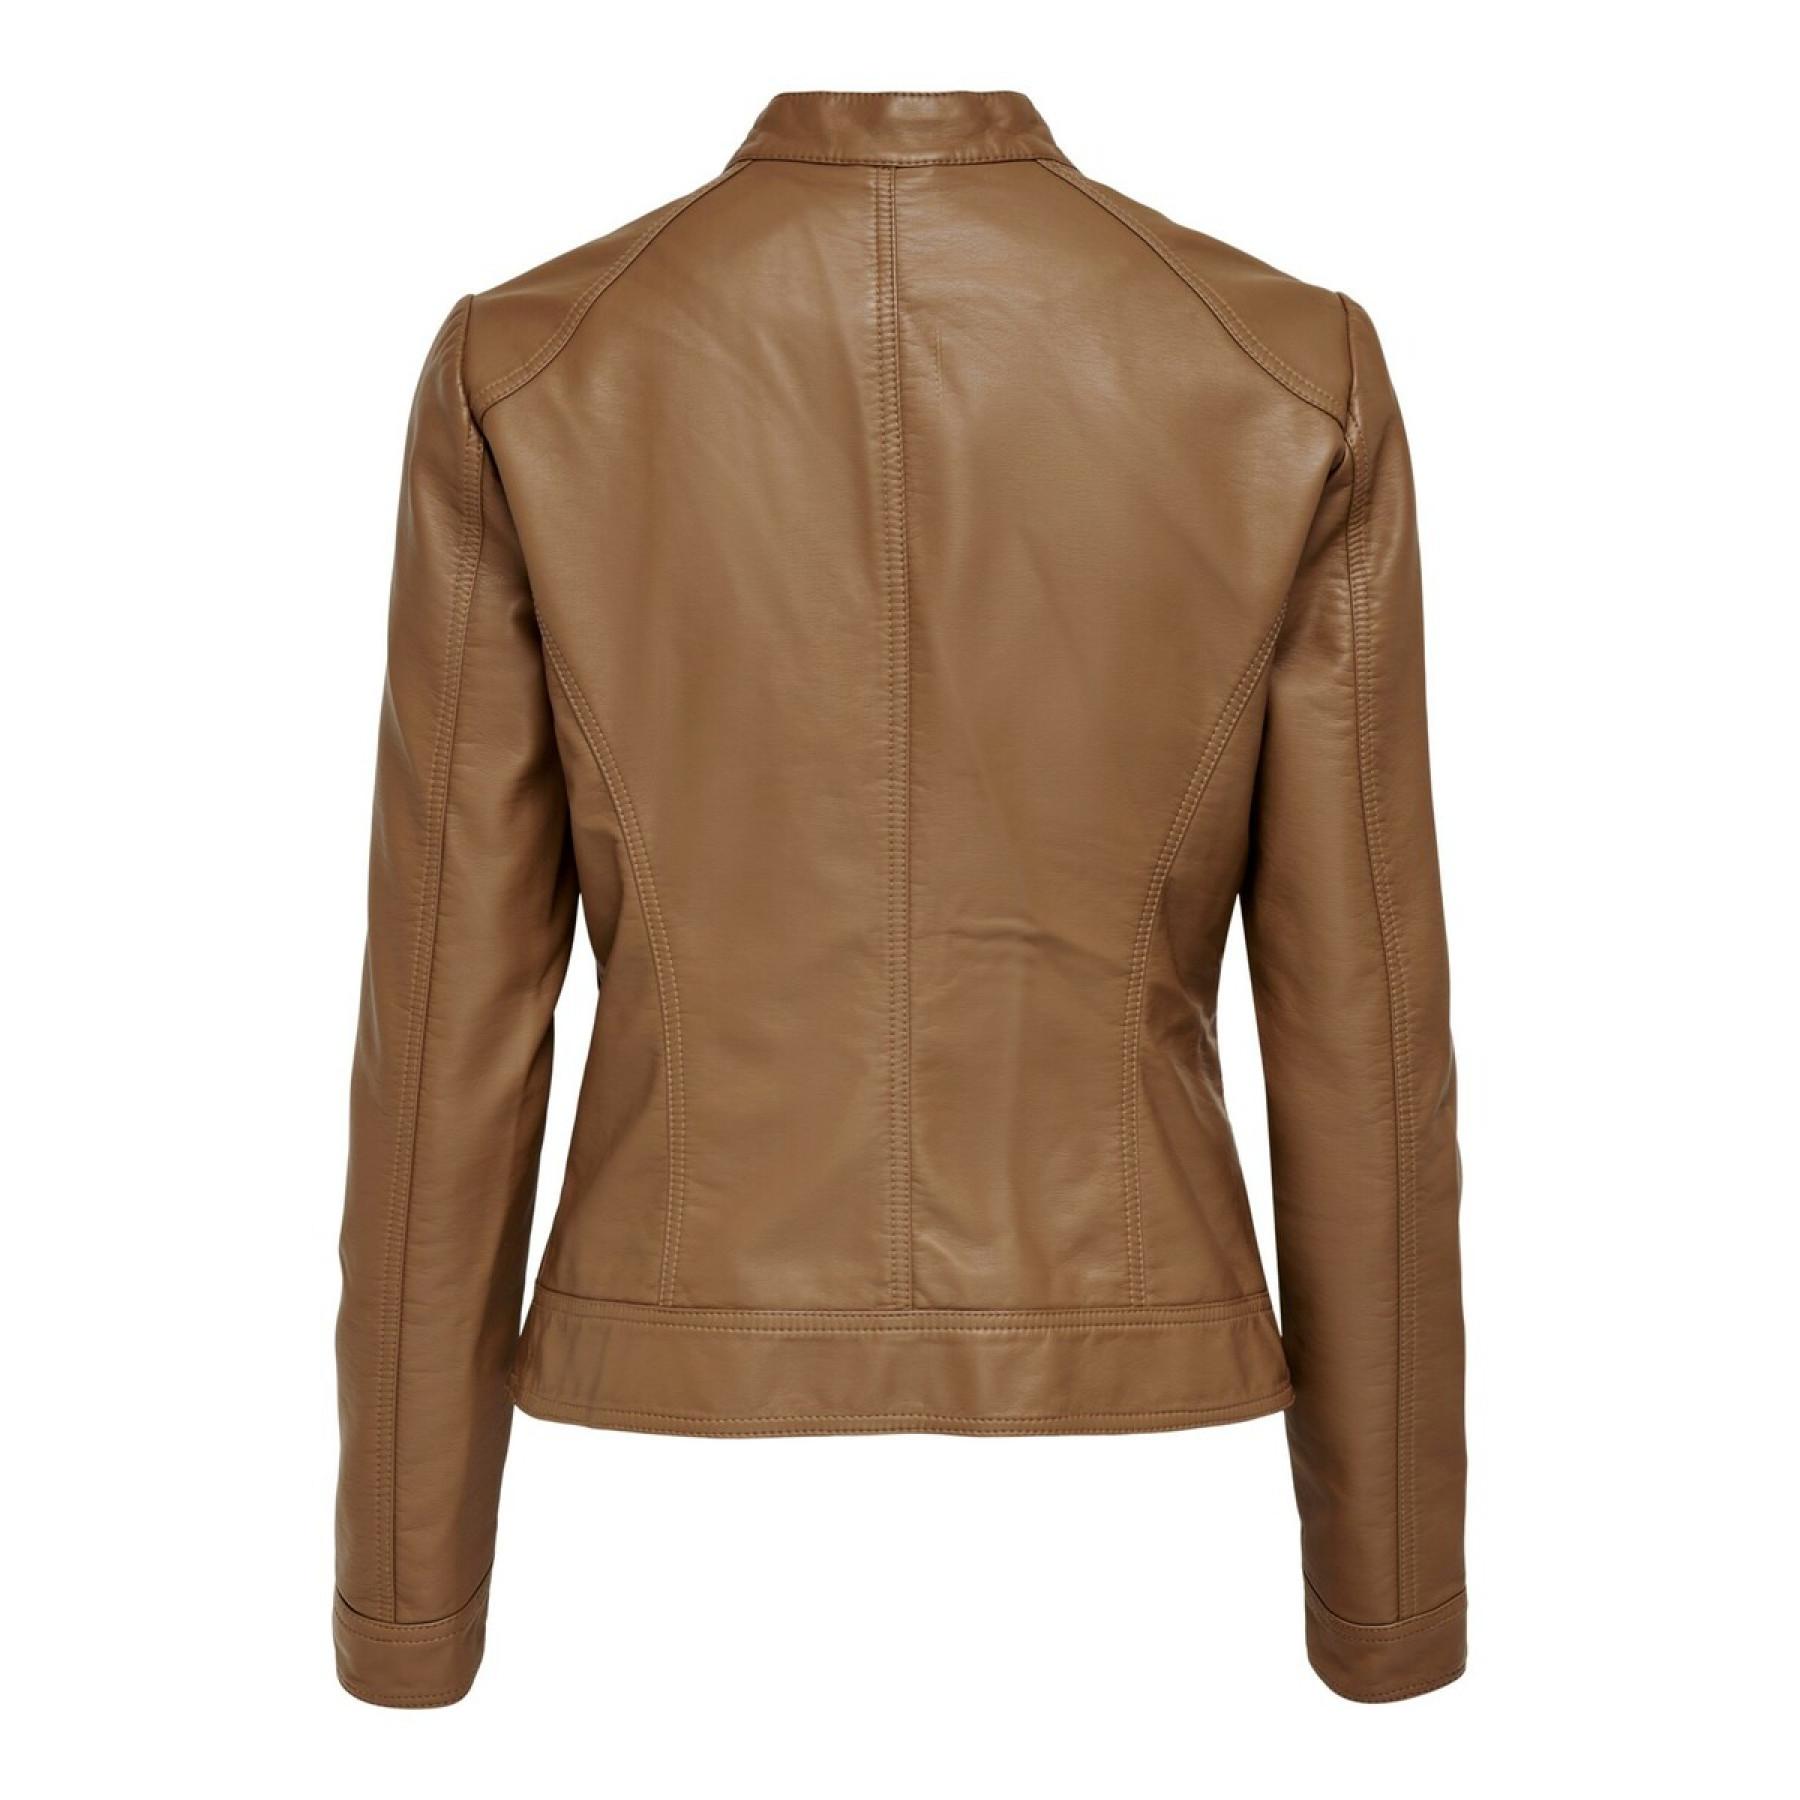 Leather jacket woman Only Bandit imitation cuir biker